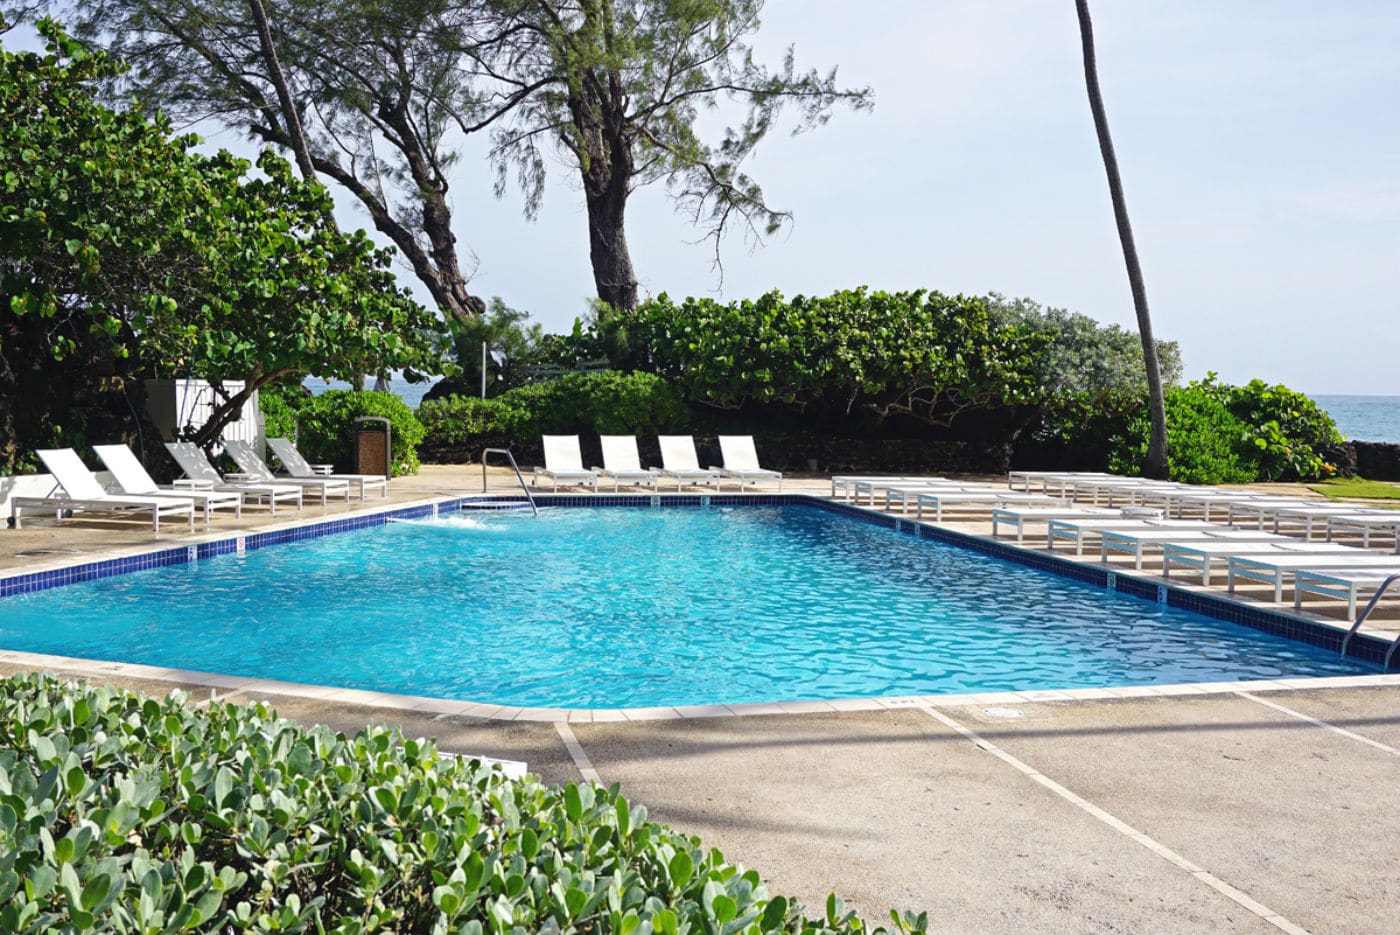 The Condado Plaza Hilton hotel Saltwater Pool,San Juan Puerto Rico